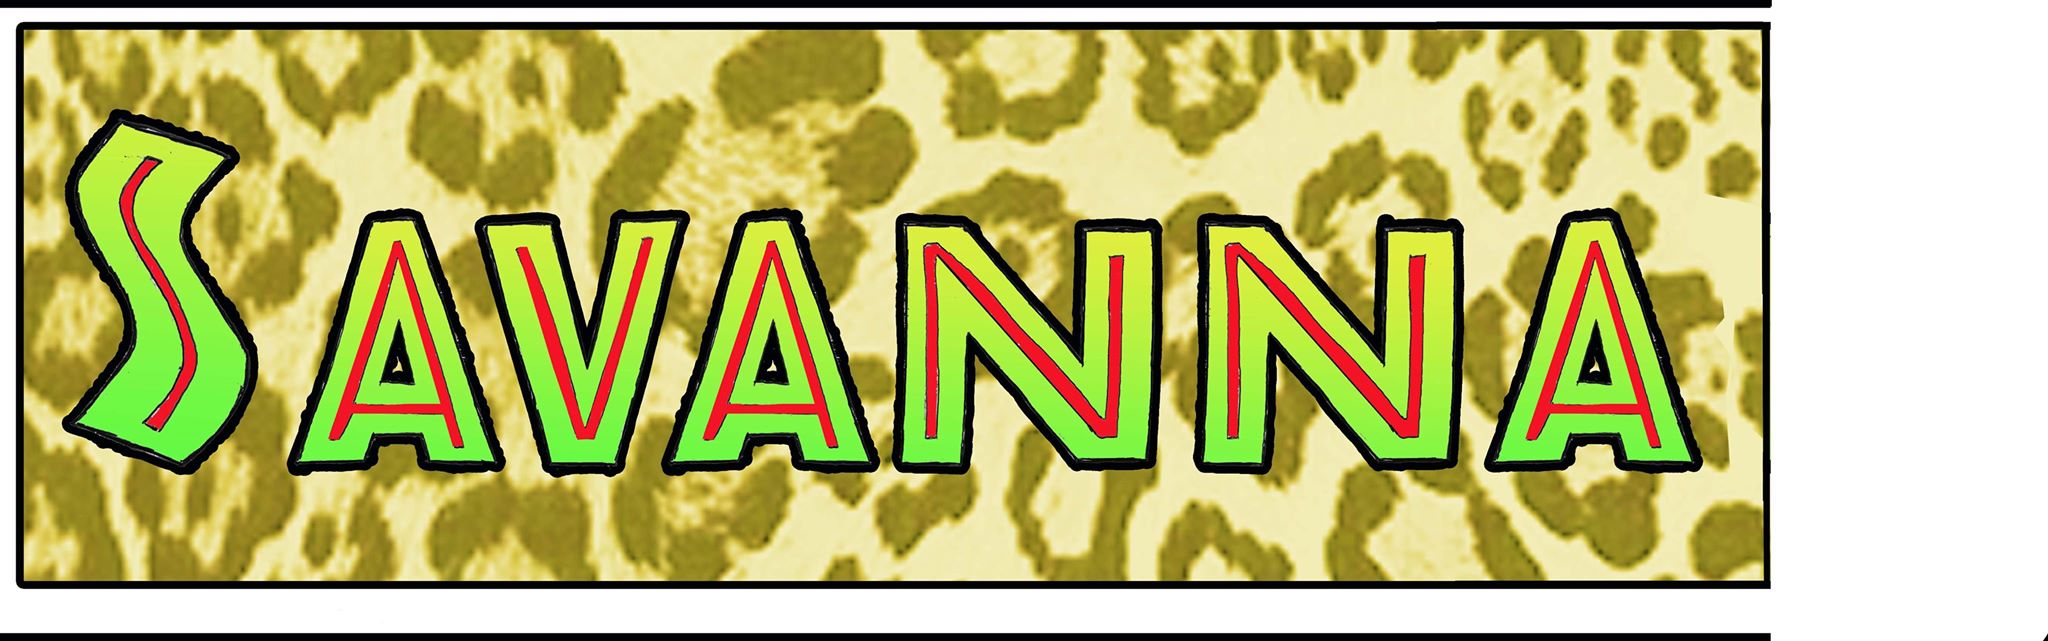 savanna logo spelled correctly.jpg